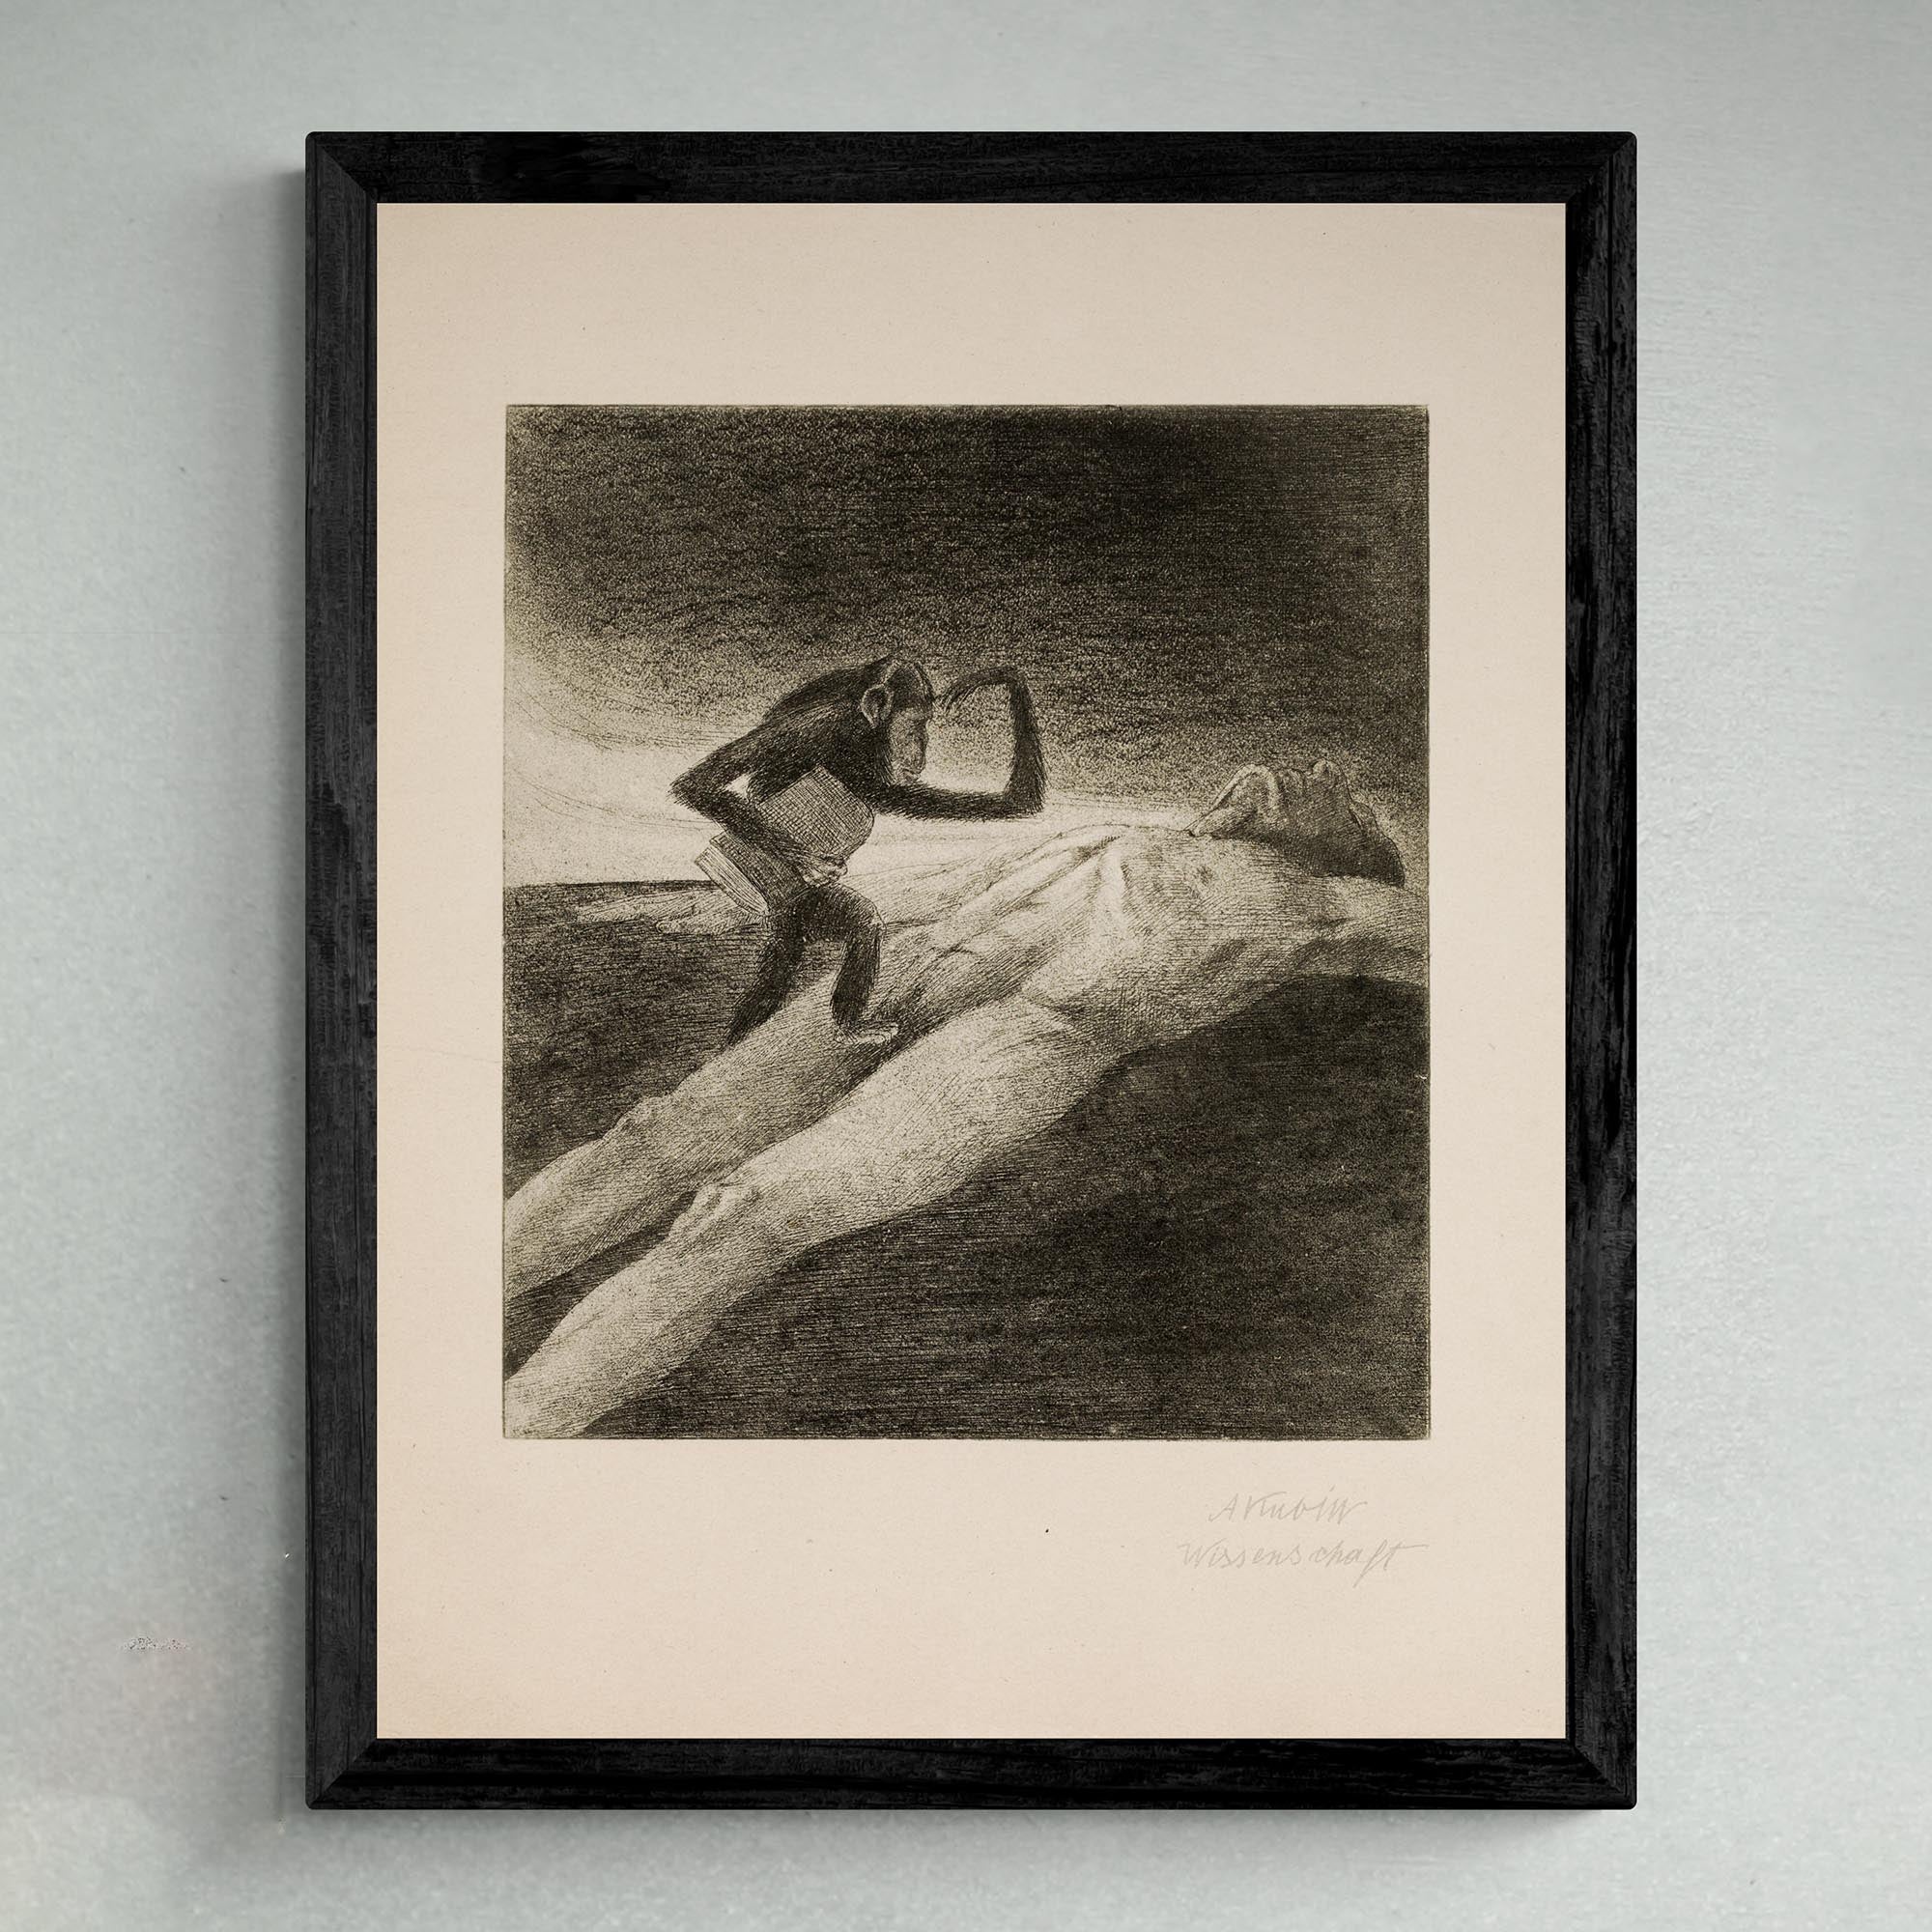 Fine art 6"x8" / Black Frame Alfred Kubin, Wissenschaft | 19th-Century Surreal Symbolist Lithograph | Grotesque Fantasy Occult Chimp Monkey Ape Framed Art Print